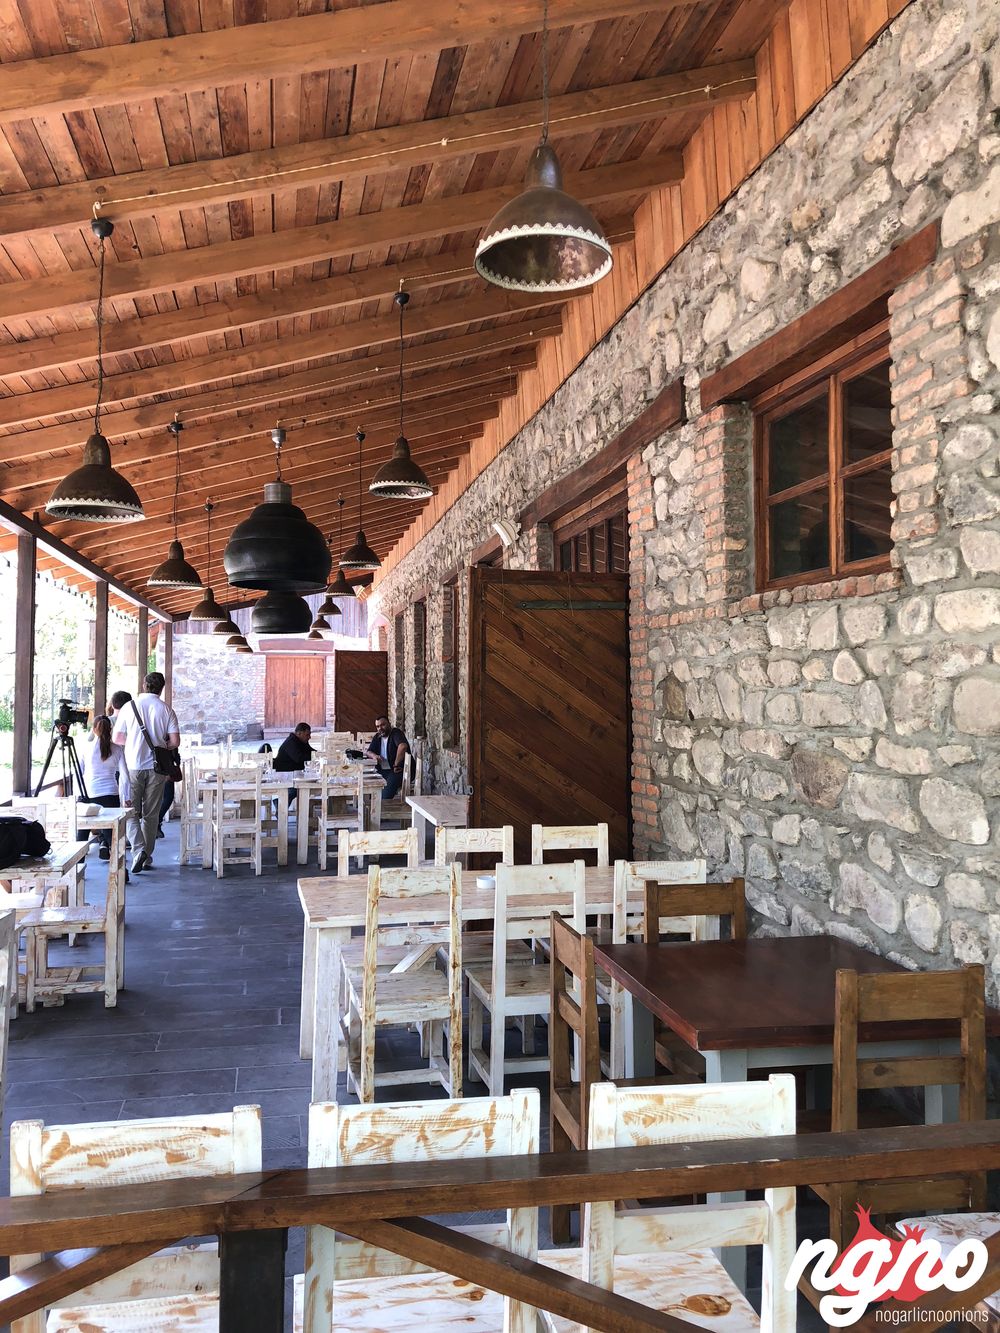 dolmama-restaurant-armenia-nogarlicnoonions-682018-05-27-11-43-37